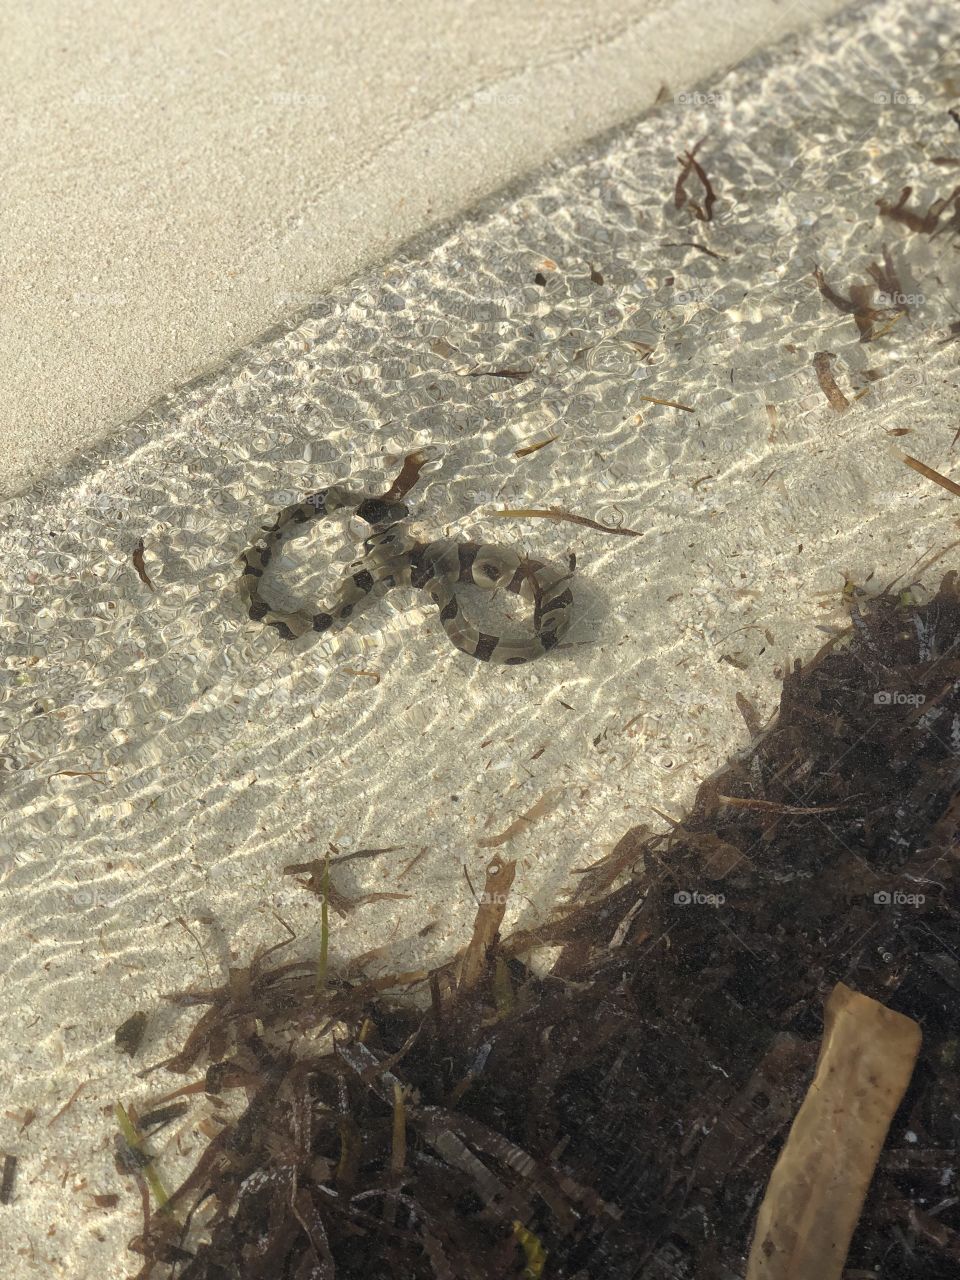 Sea snake found in Lh. Maafilaafushi